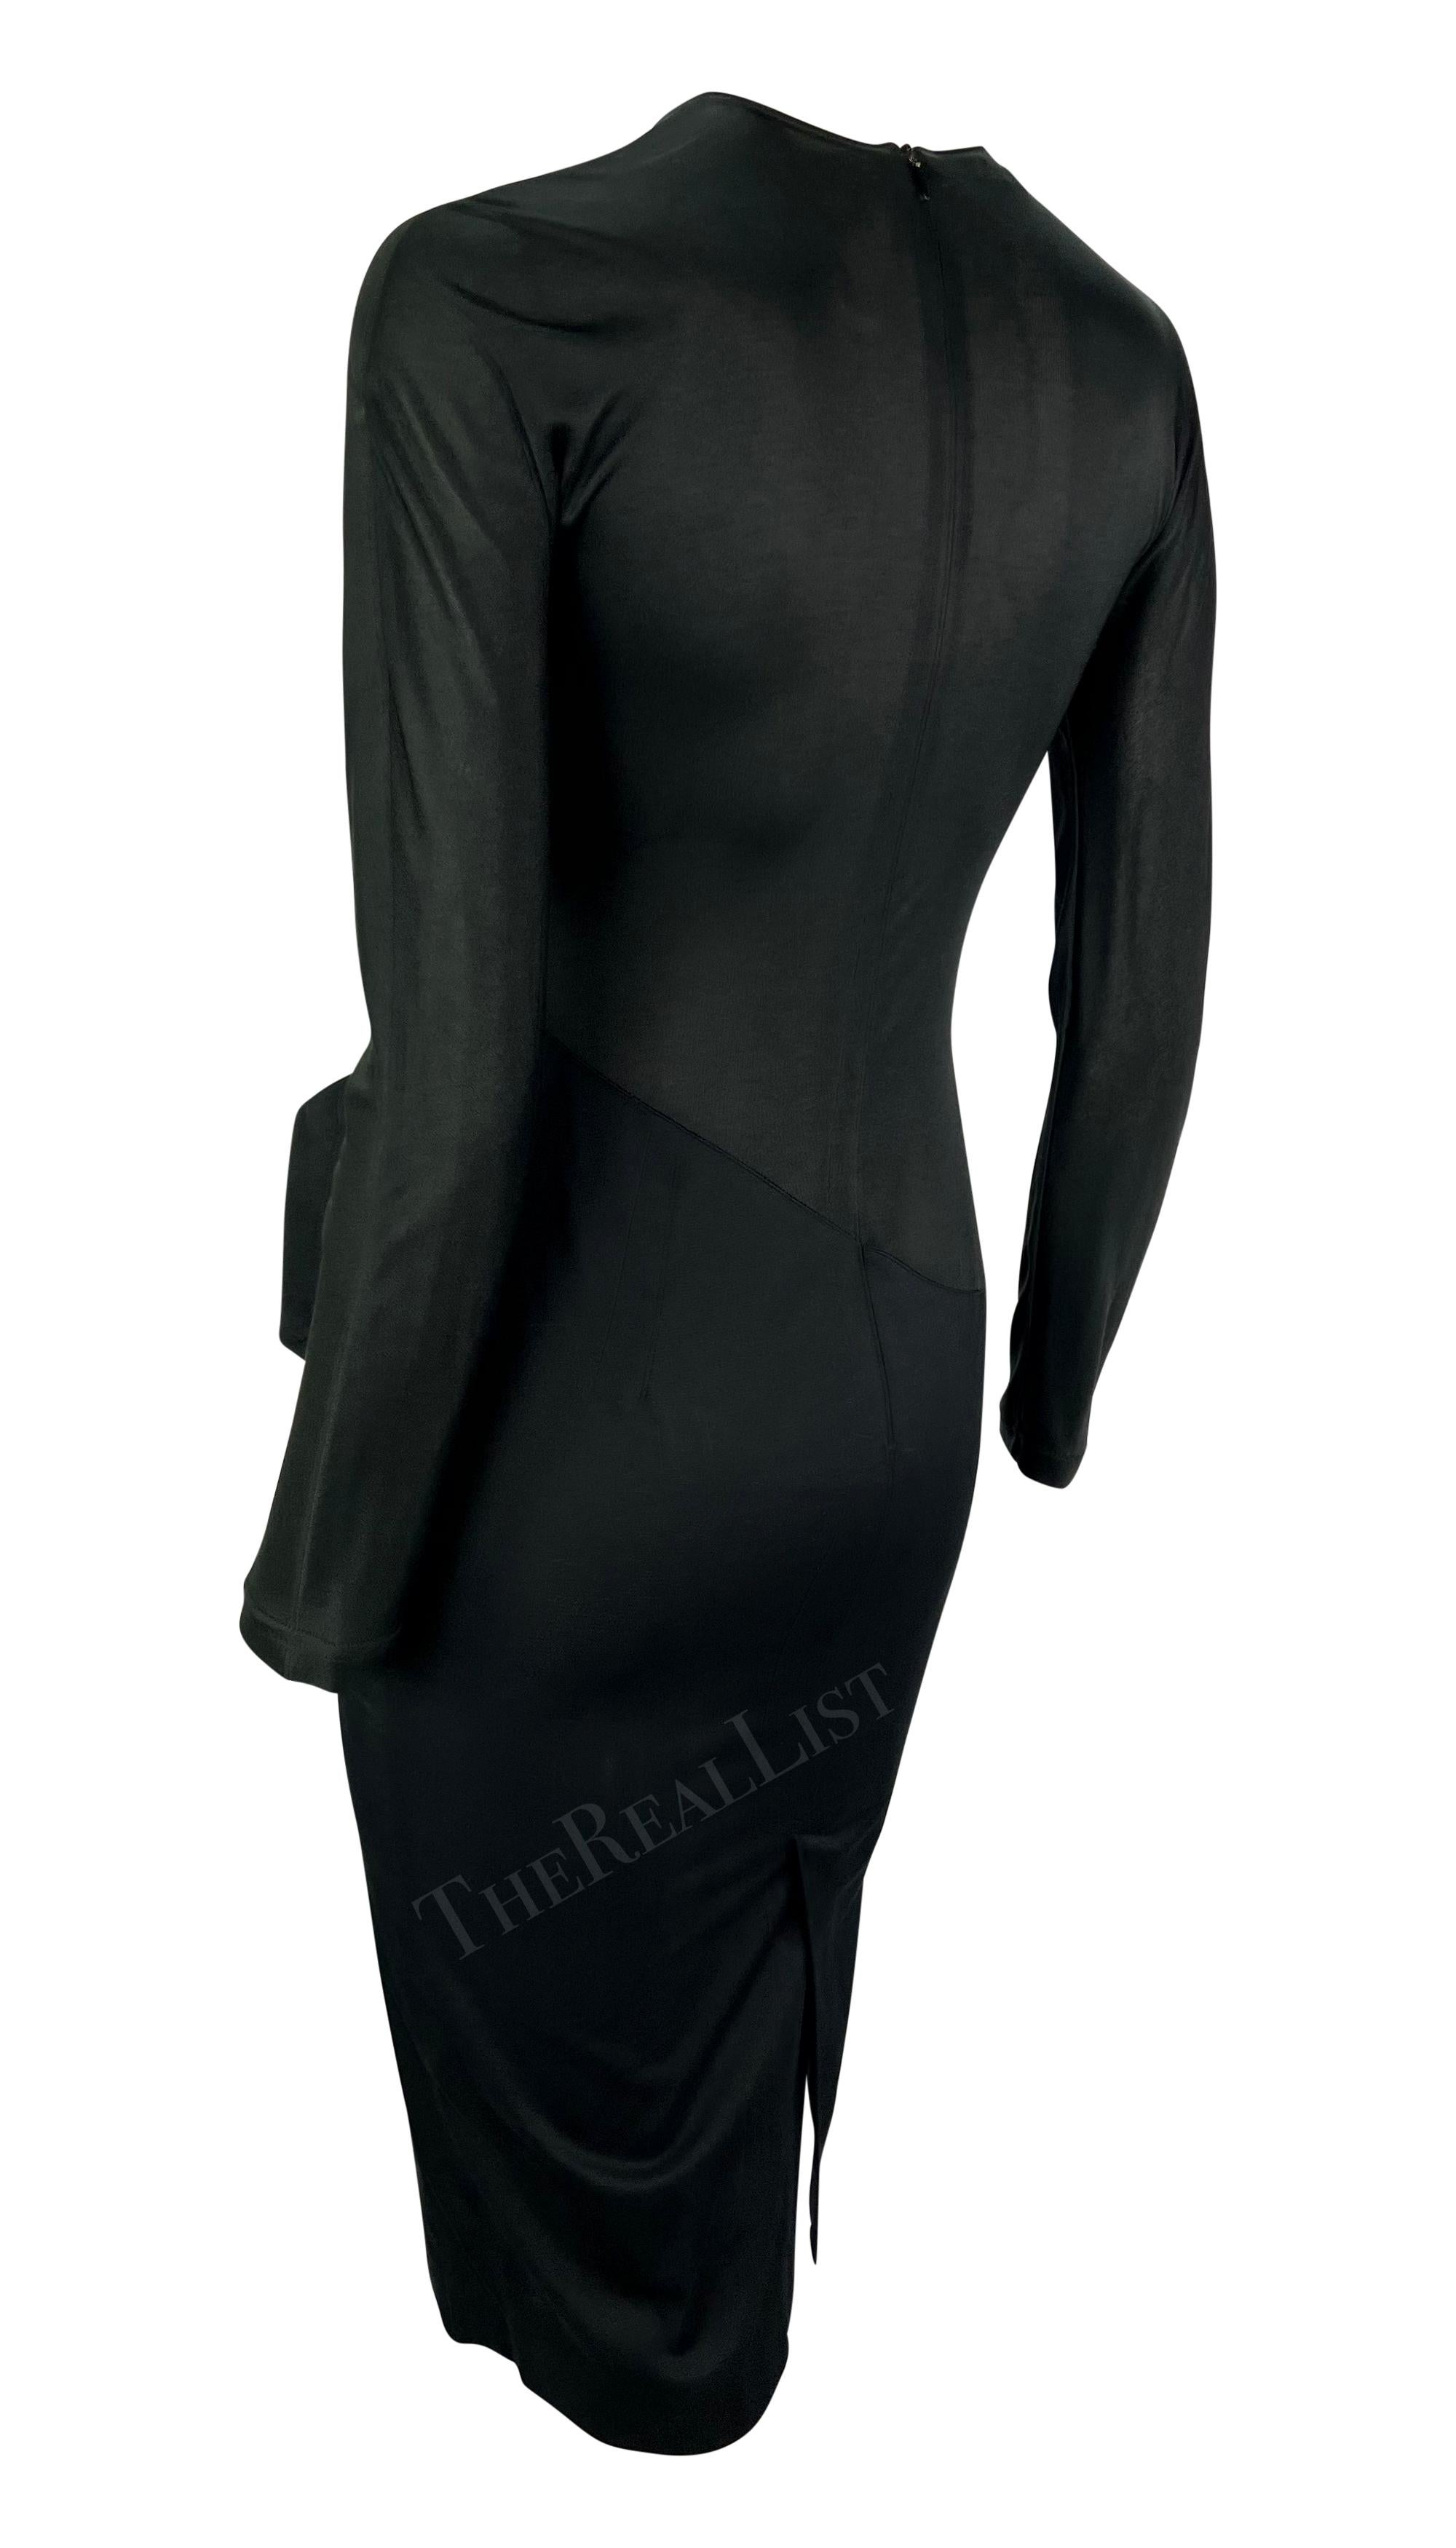 Women's S/S 1998 Alexander McQueen 'Golden Shower' Black Long Sleeve Cowl Dress For Sale